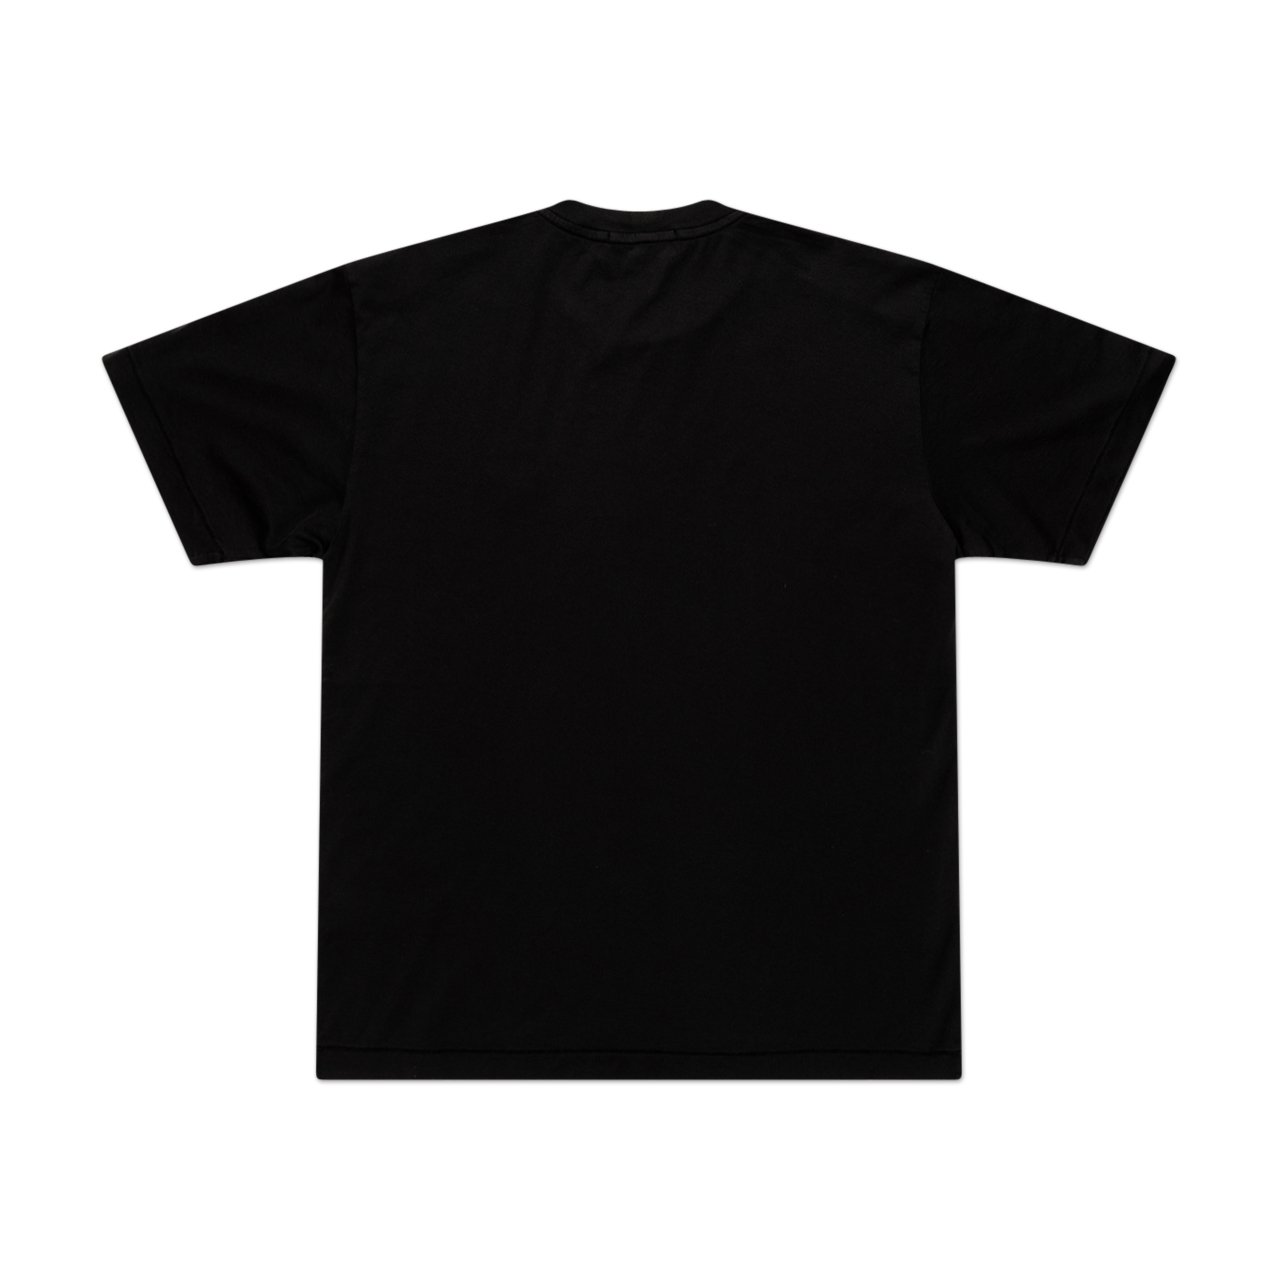 stone island stone island cotton t-shirt (black)